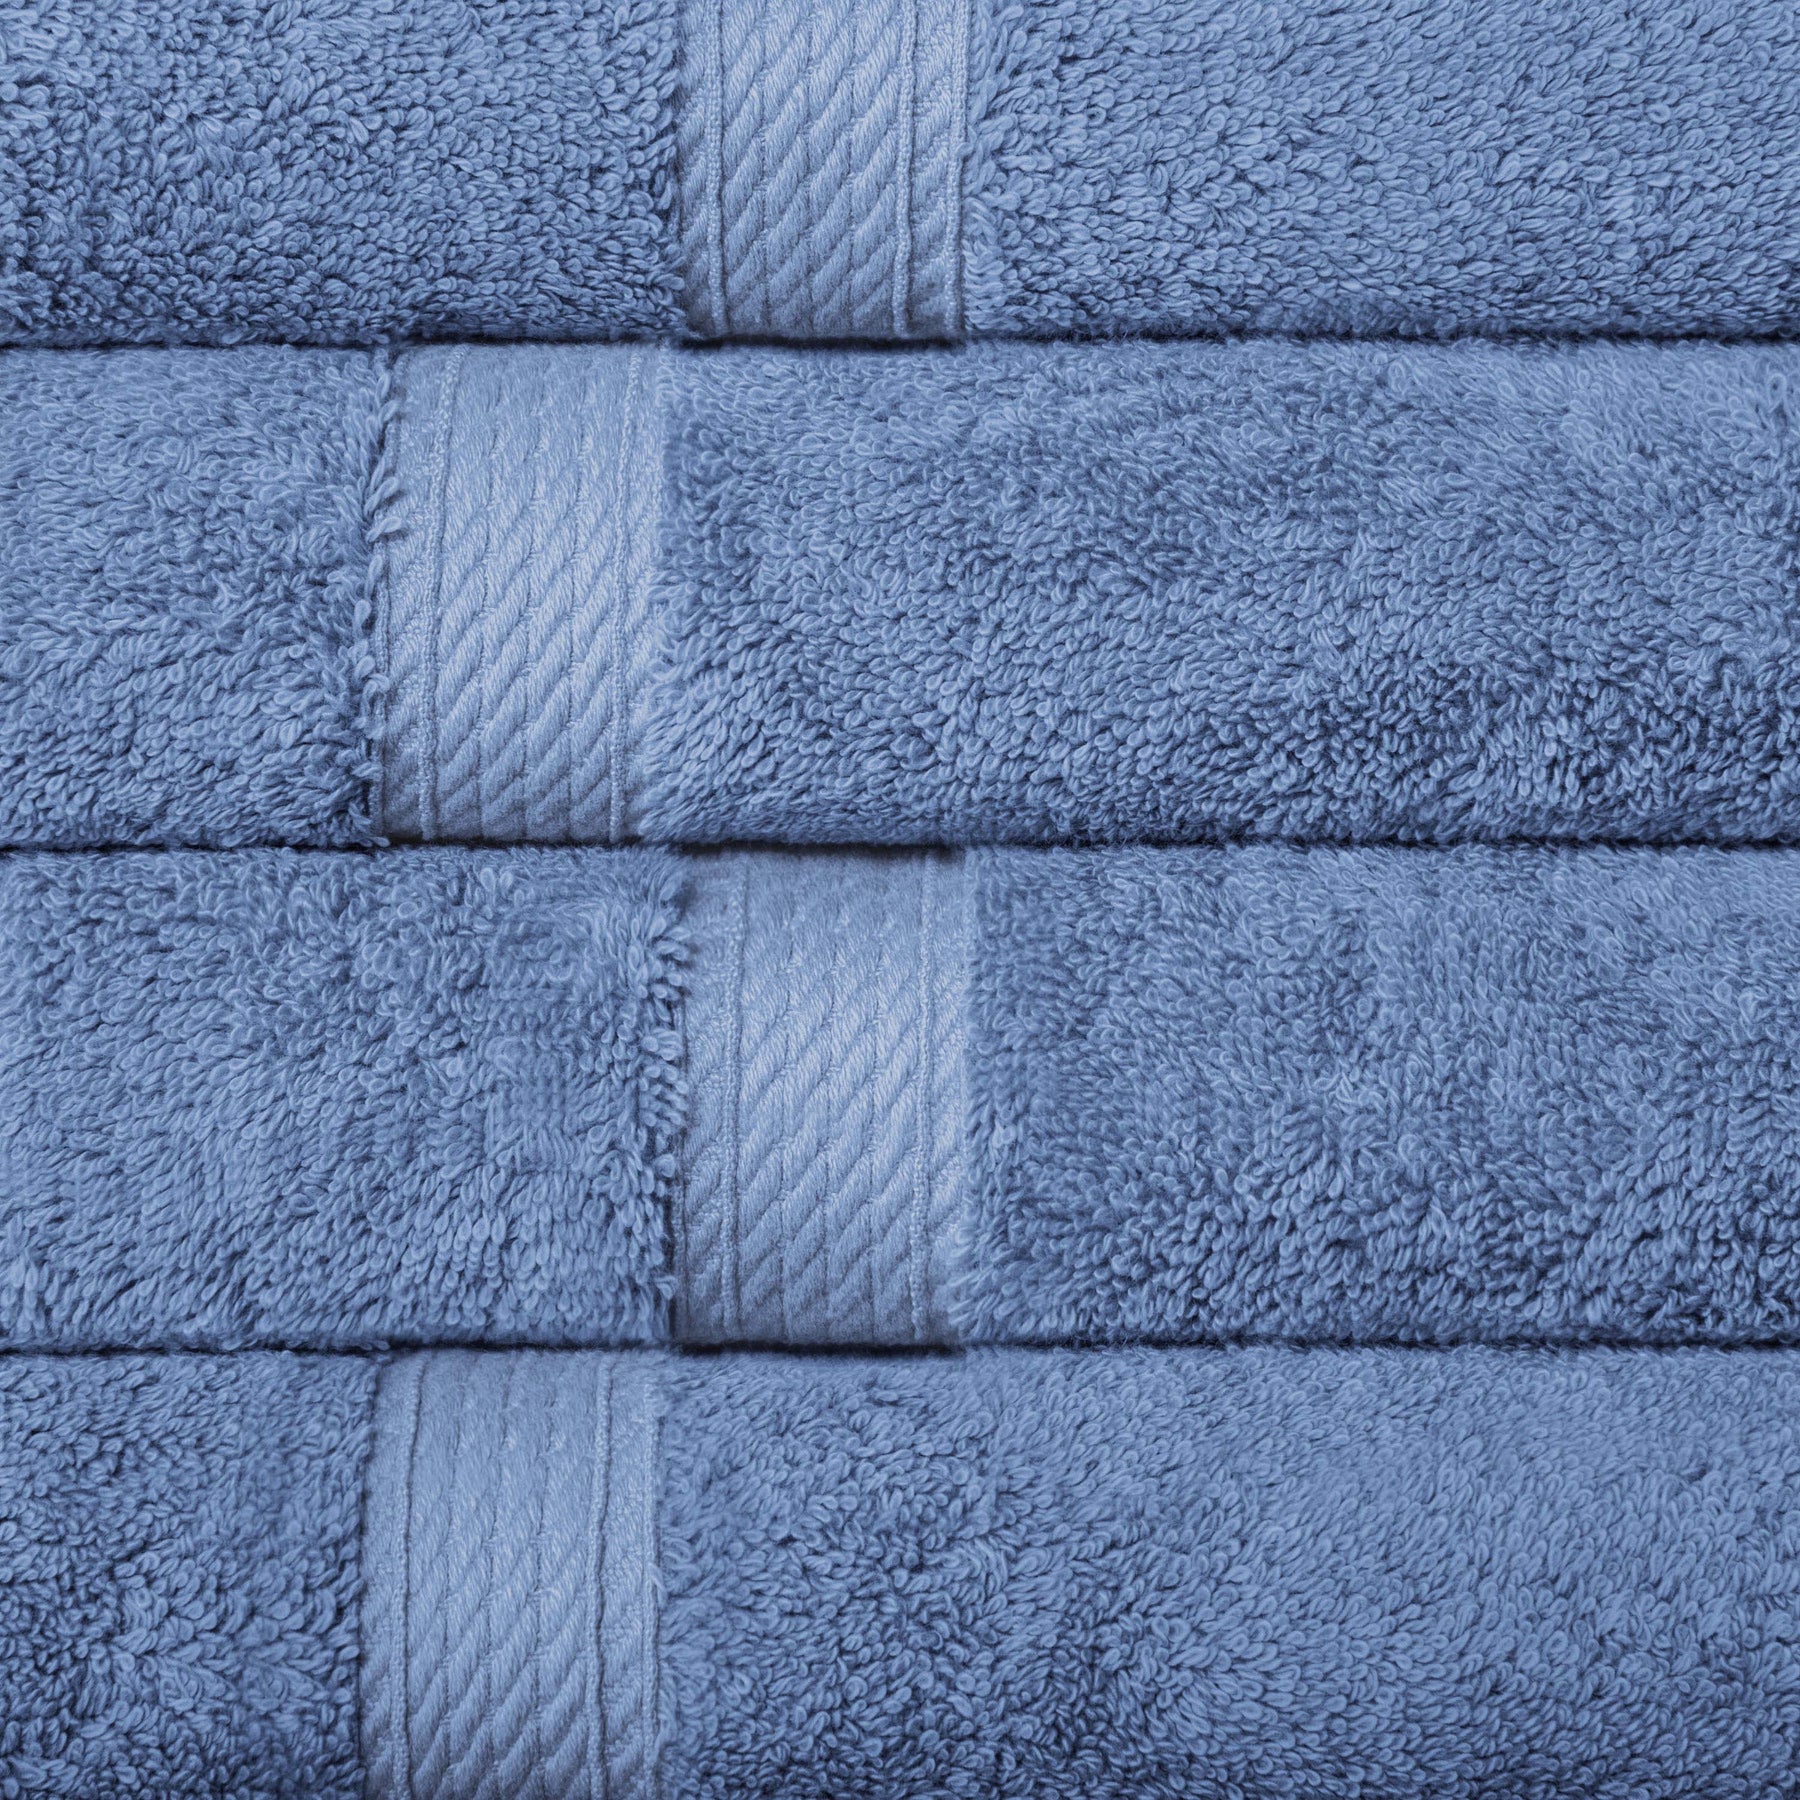 Superior Egyptian Cotton Plush Heavyweight Absorbent Luxury Soft 9-Piece Towel Set - Denim Blue